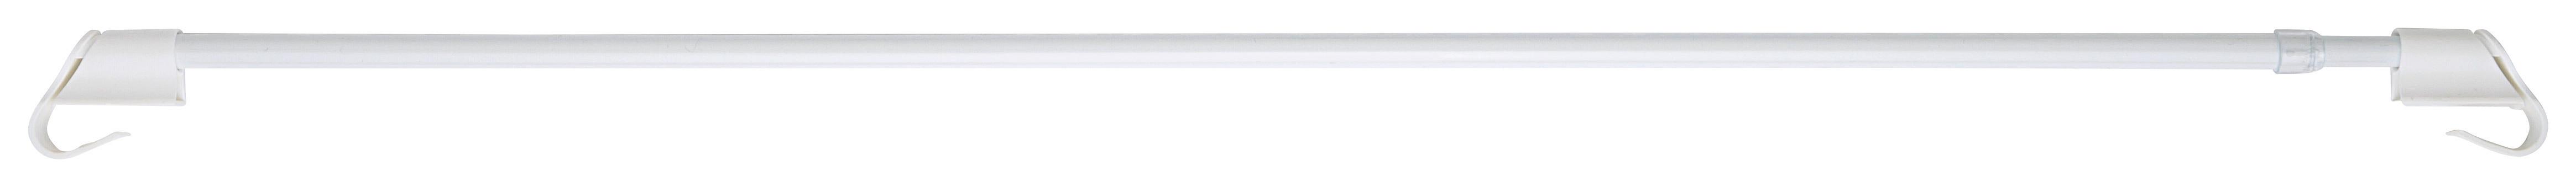 Upínací Tyč Connect, 85-135 Cm - bílá, kov/plast (85-135cm) - Modern Living